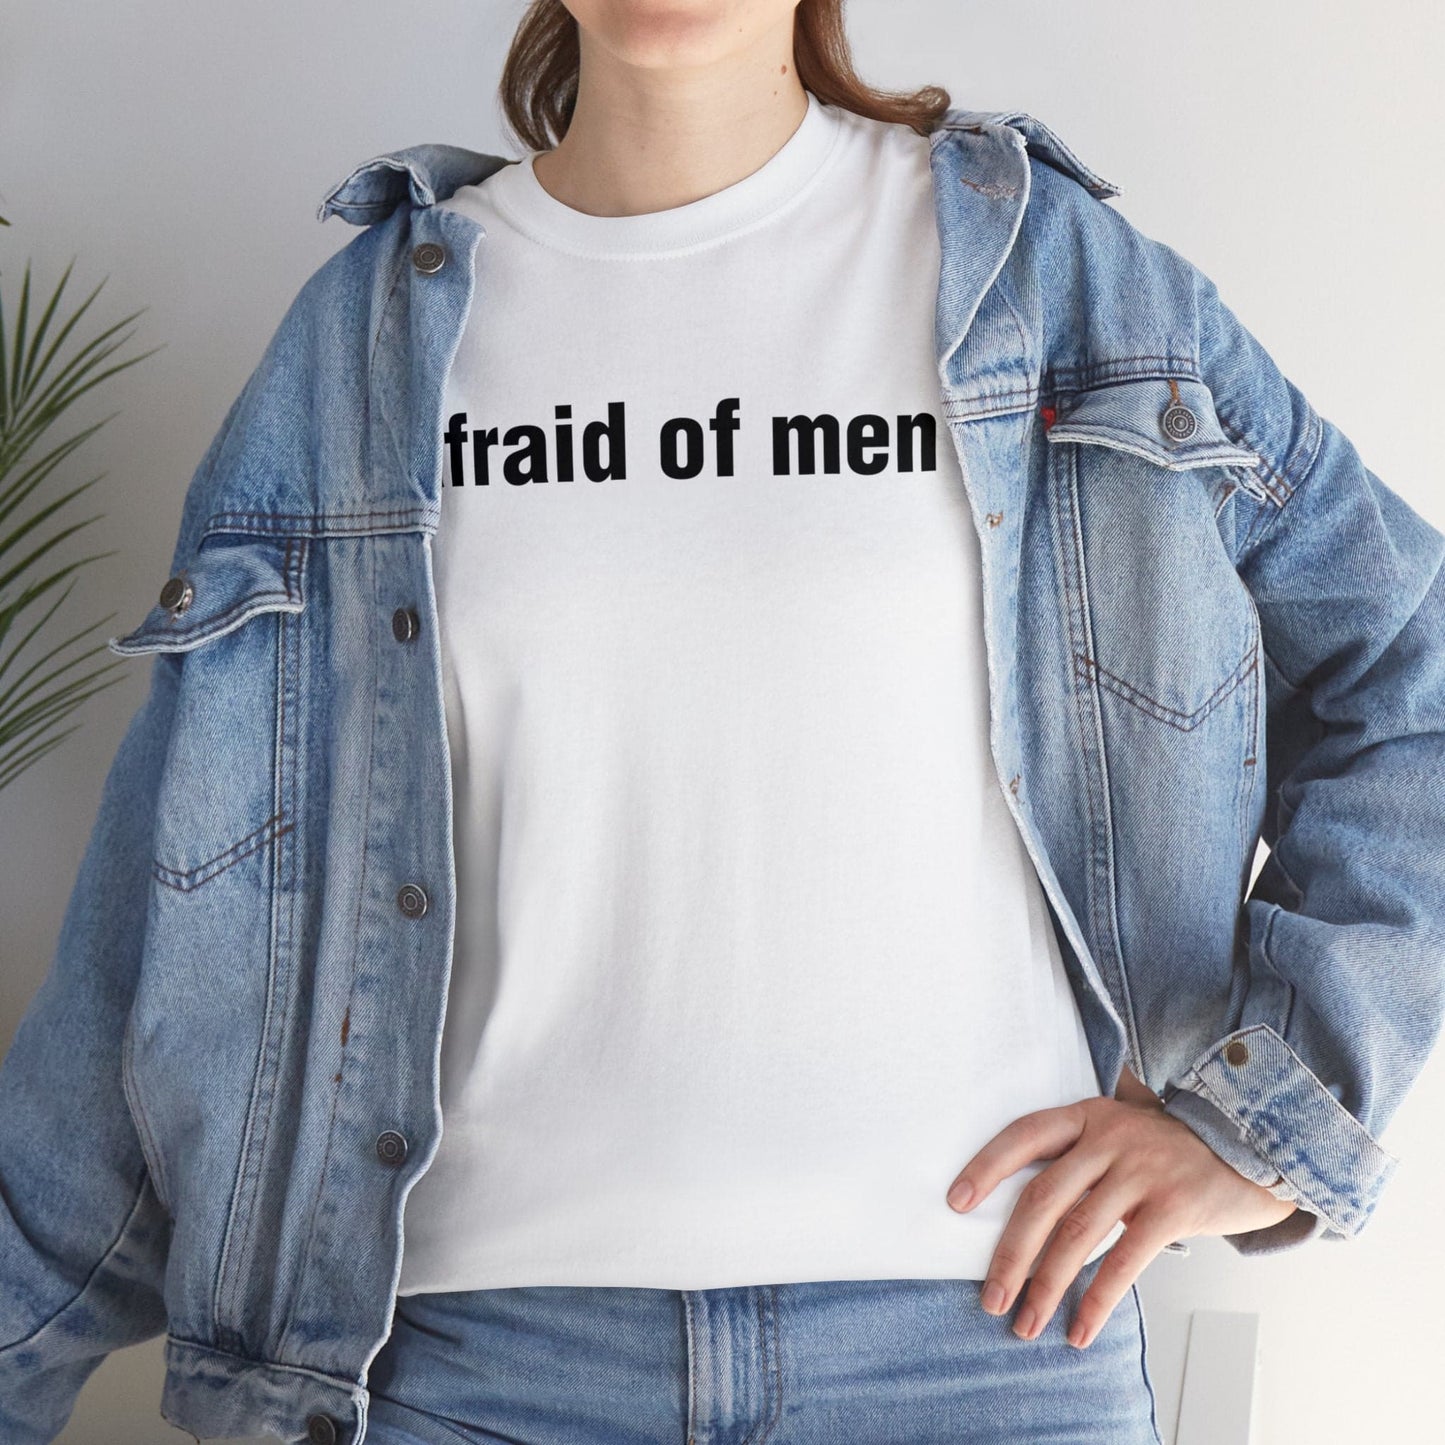 afraid of men